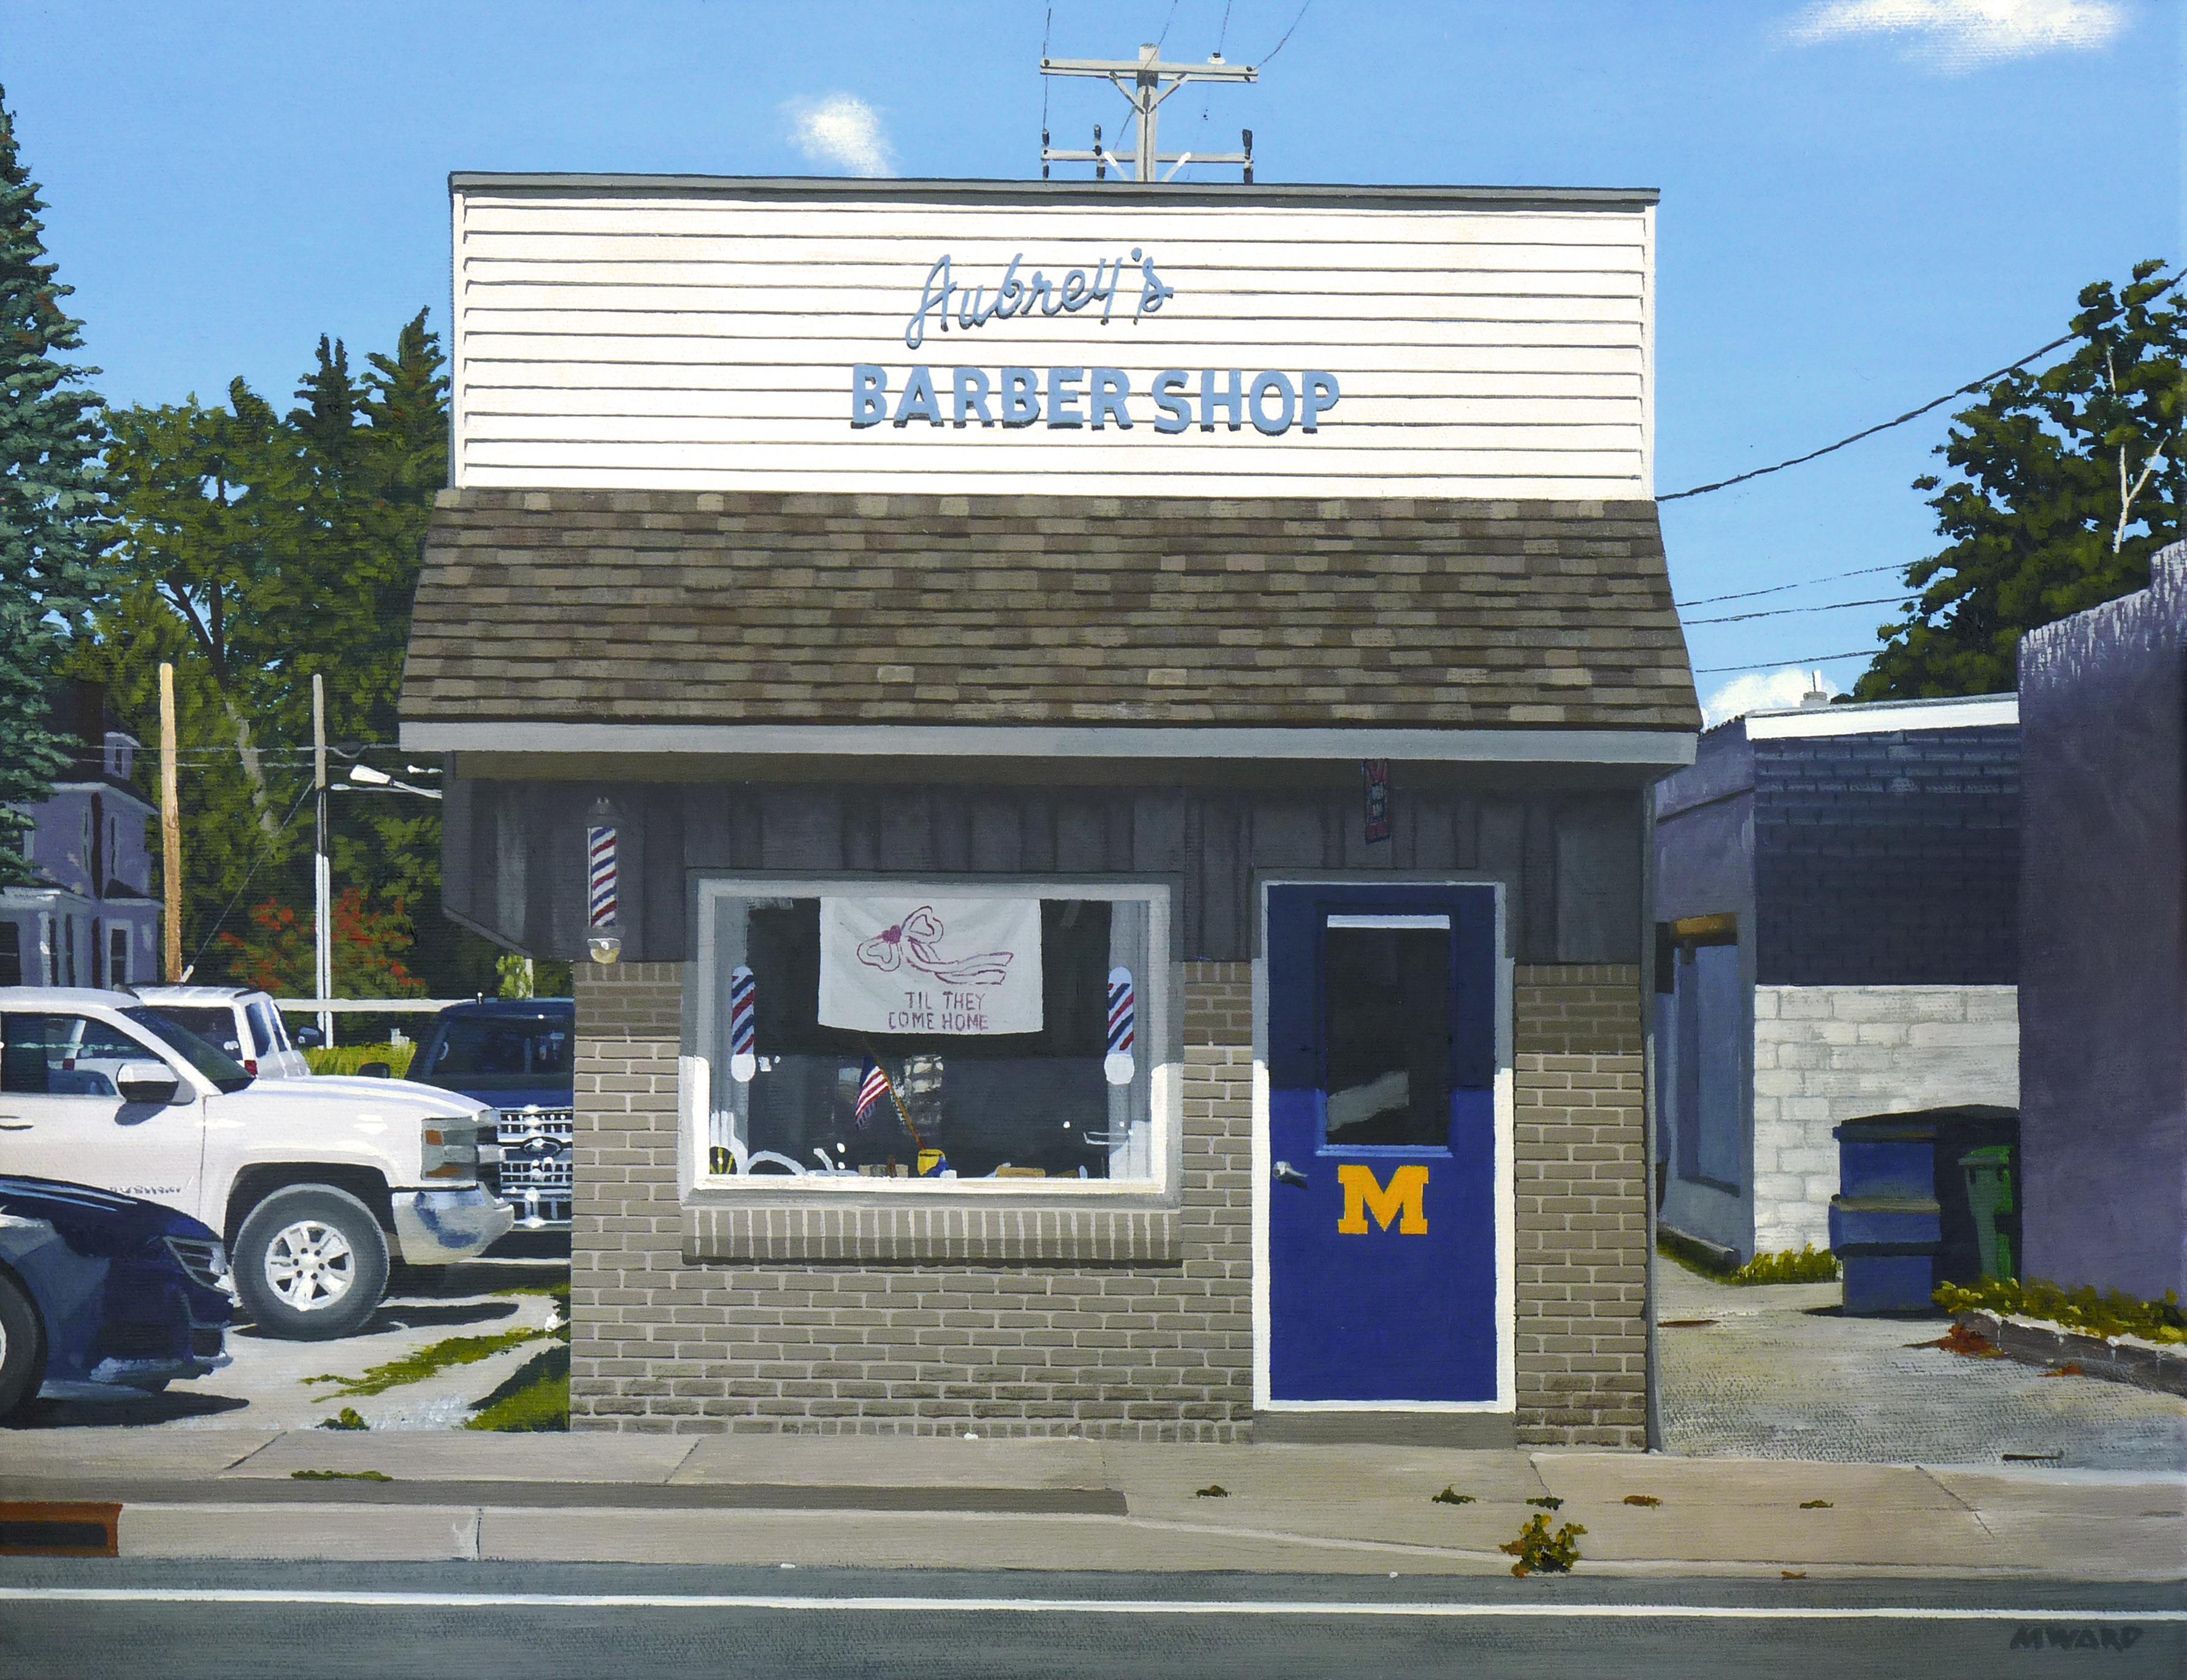 Aubrey's Barber Shop - Art by Michael Ward